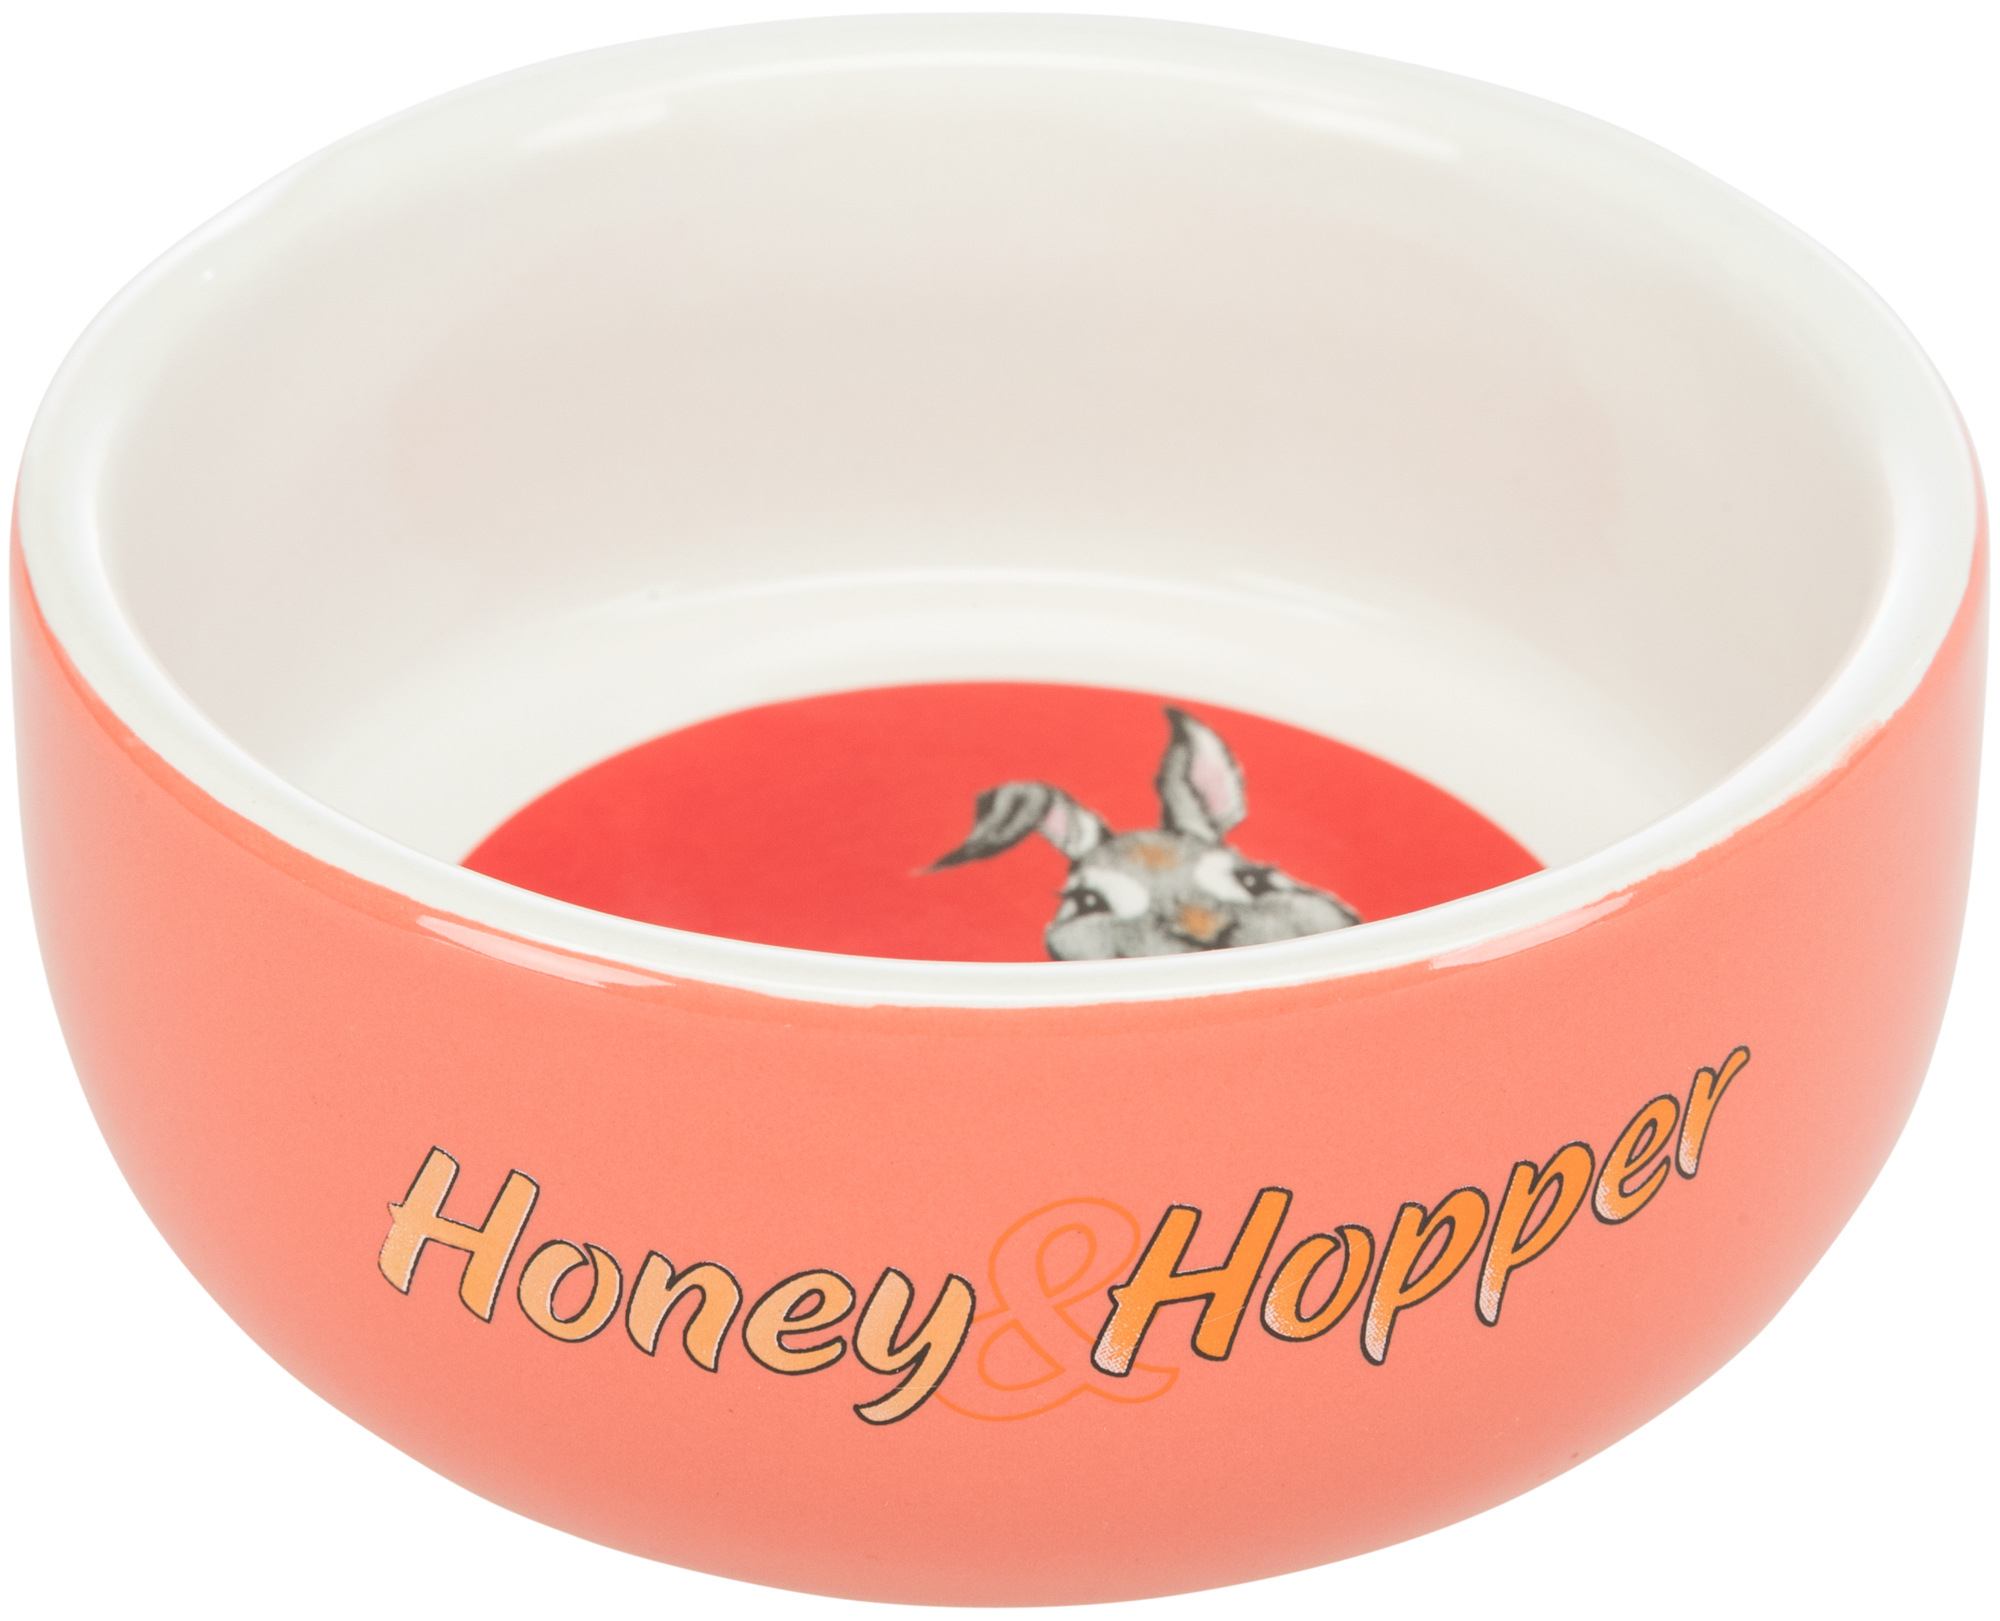 Honey & Hopper Keramieken voerkom